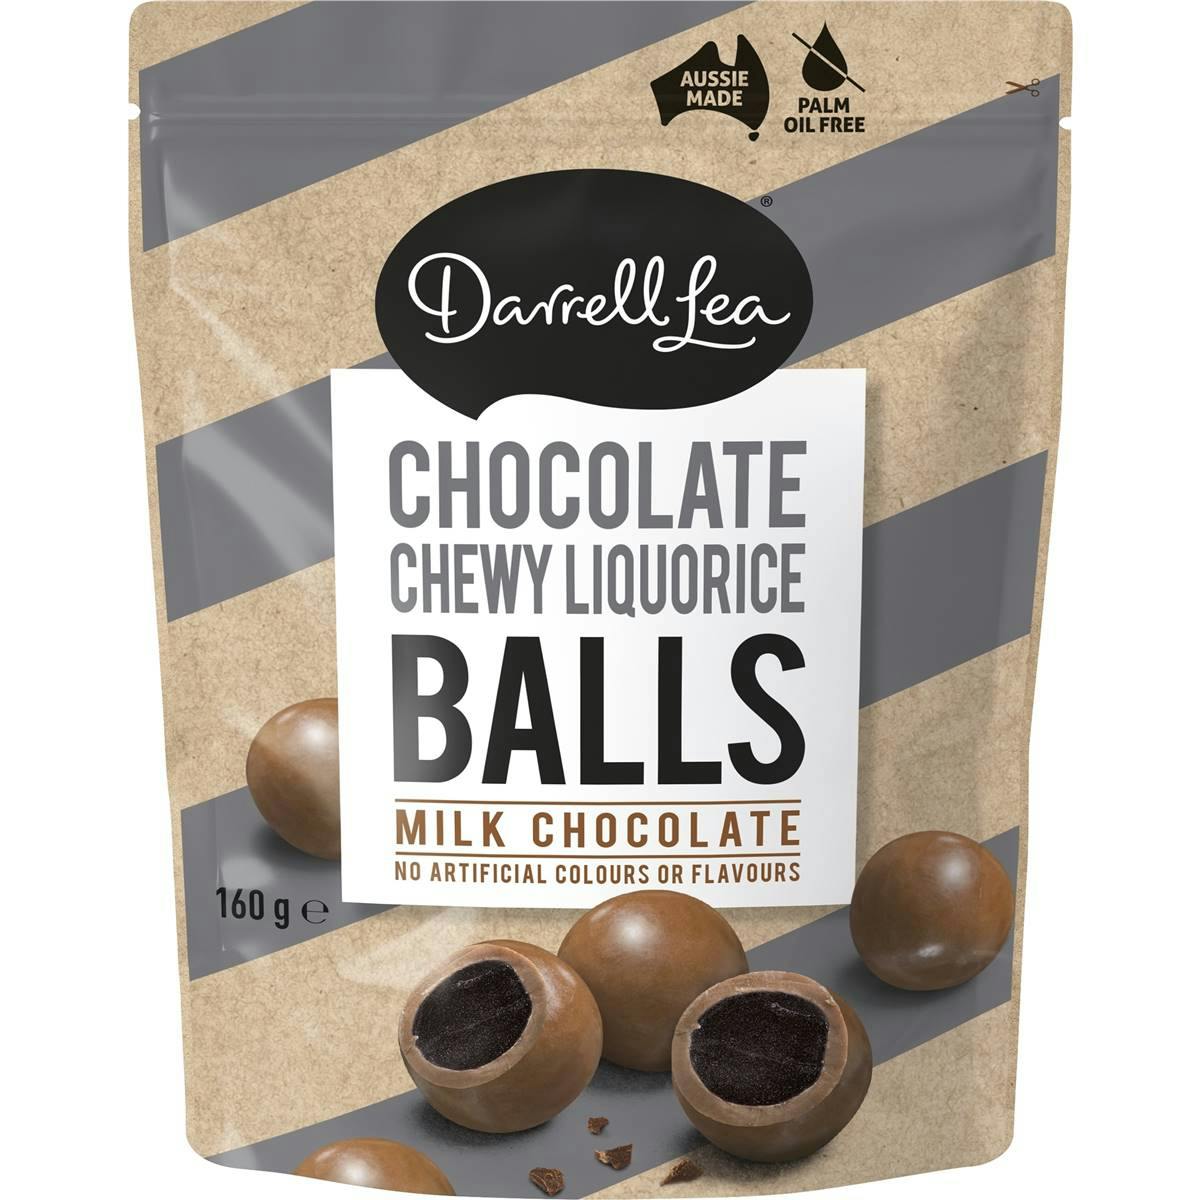 Darrell Lea Chocolate Liquorice Balls